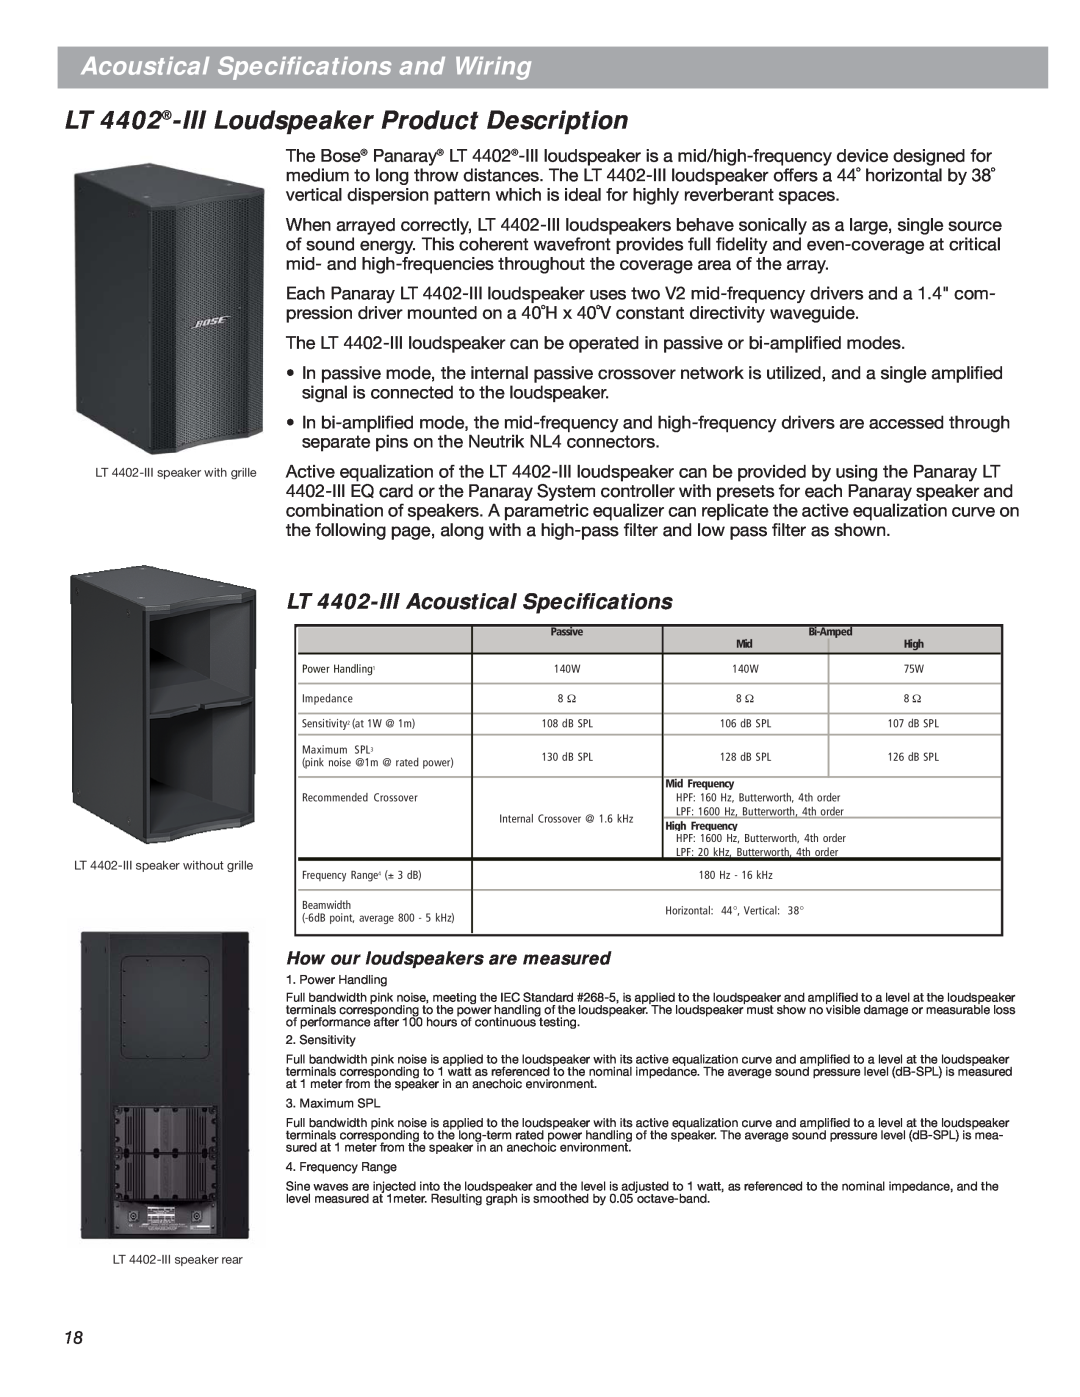 Bose LT Series III manual LT 4402-IIILoudspeaker Product Description, LT 4402-IIIAcoustical Speciﬁcations 